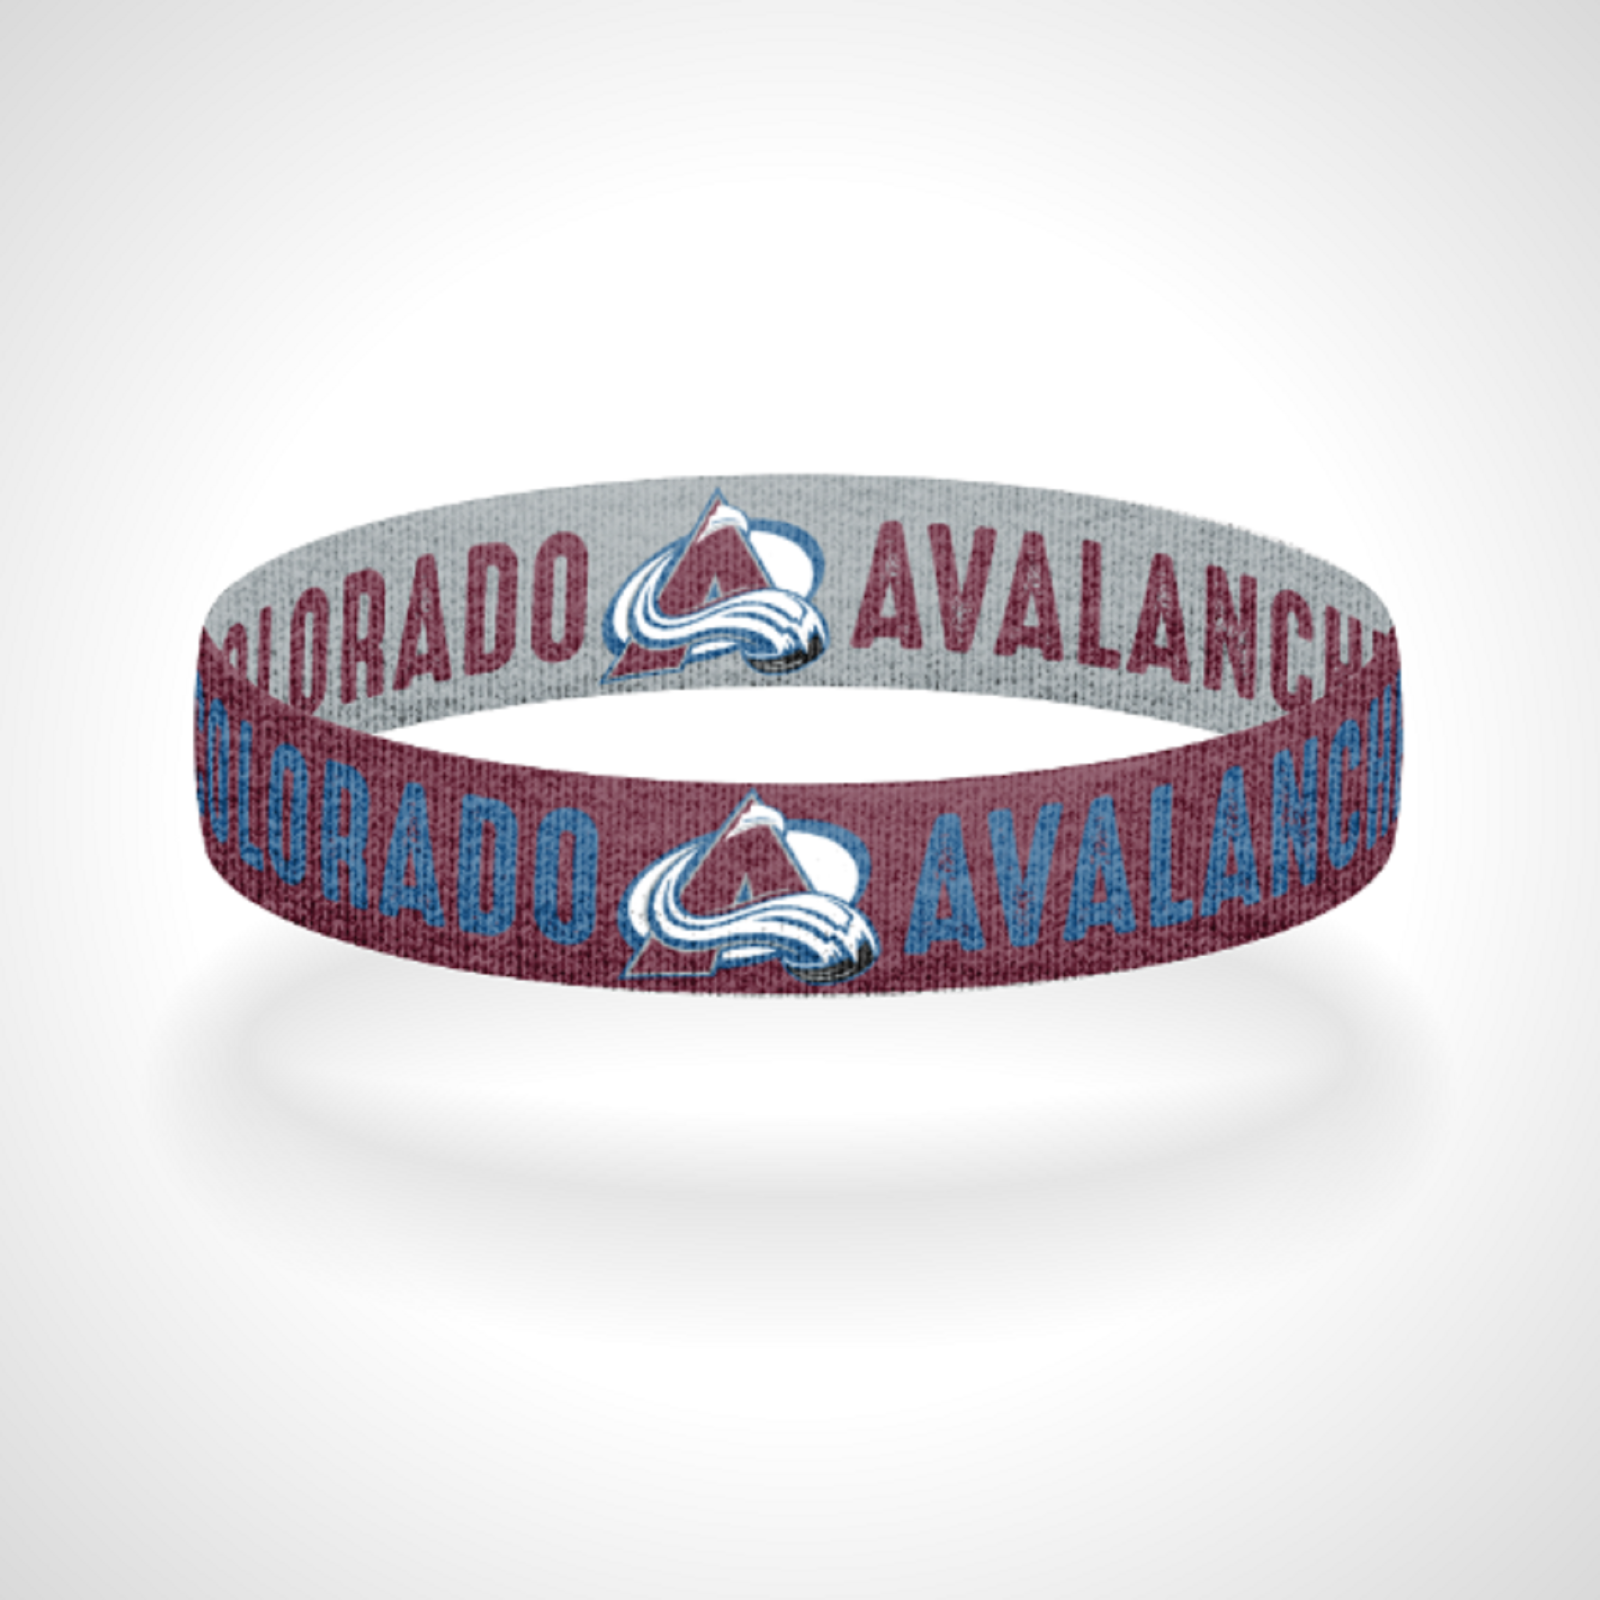 Primary image for Reversible Colorado Avalanche Bracelet Wristband Let's Go Avs